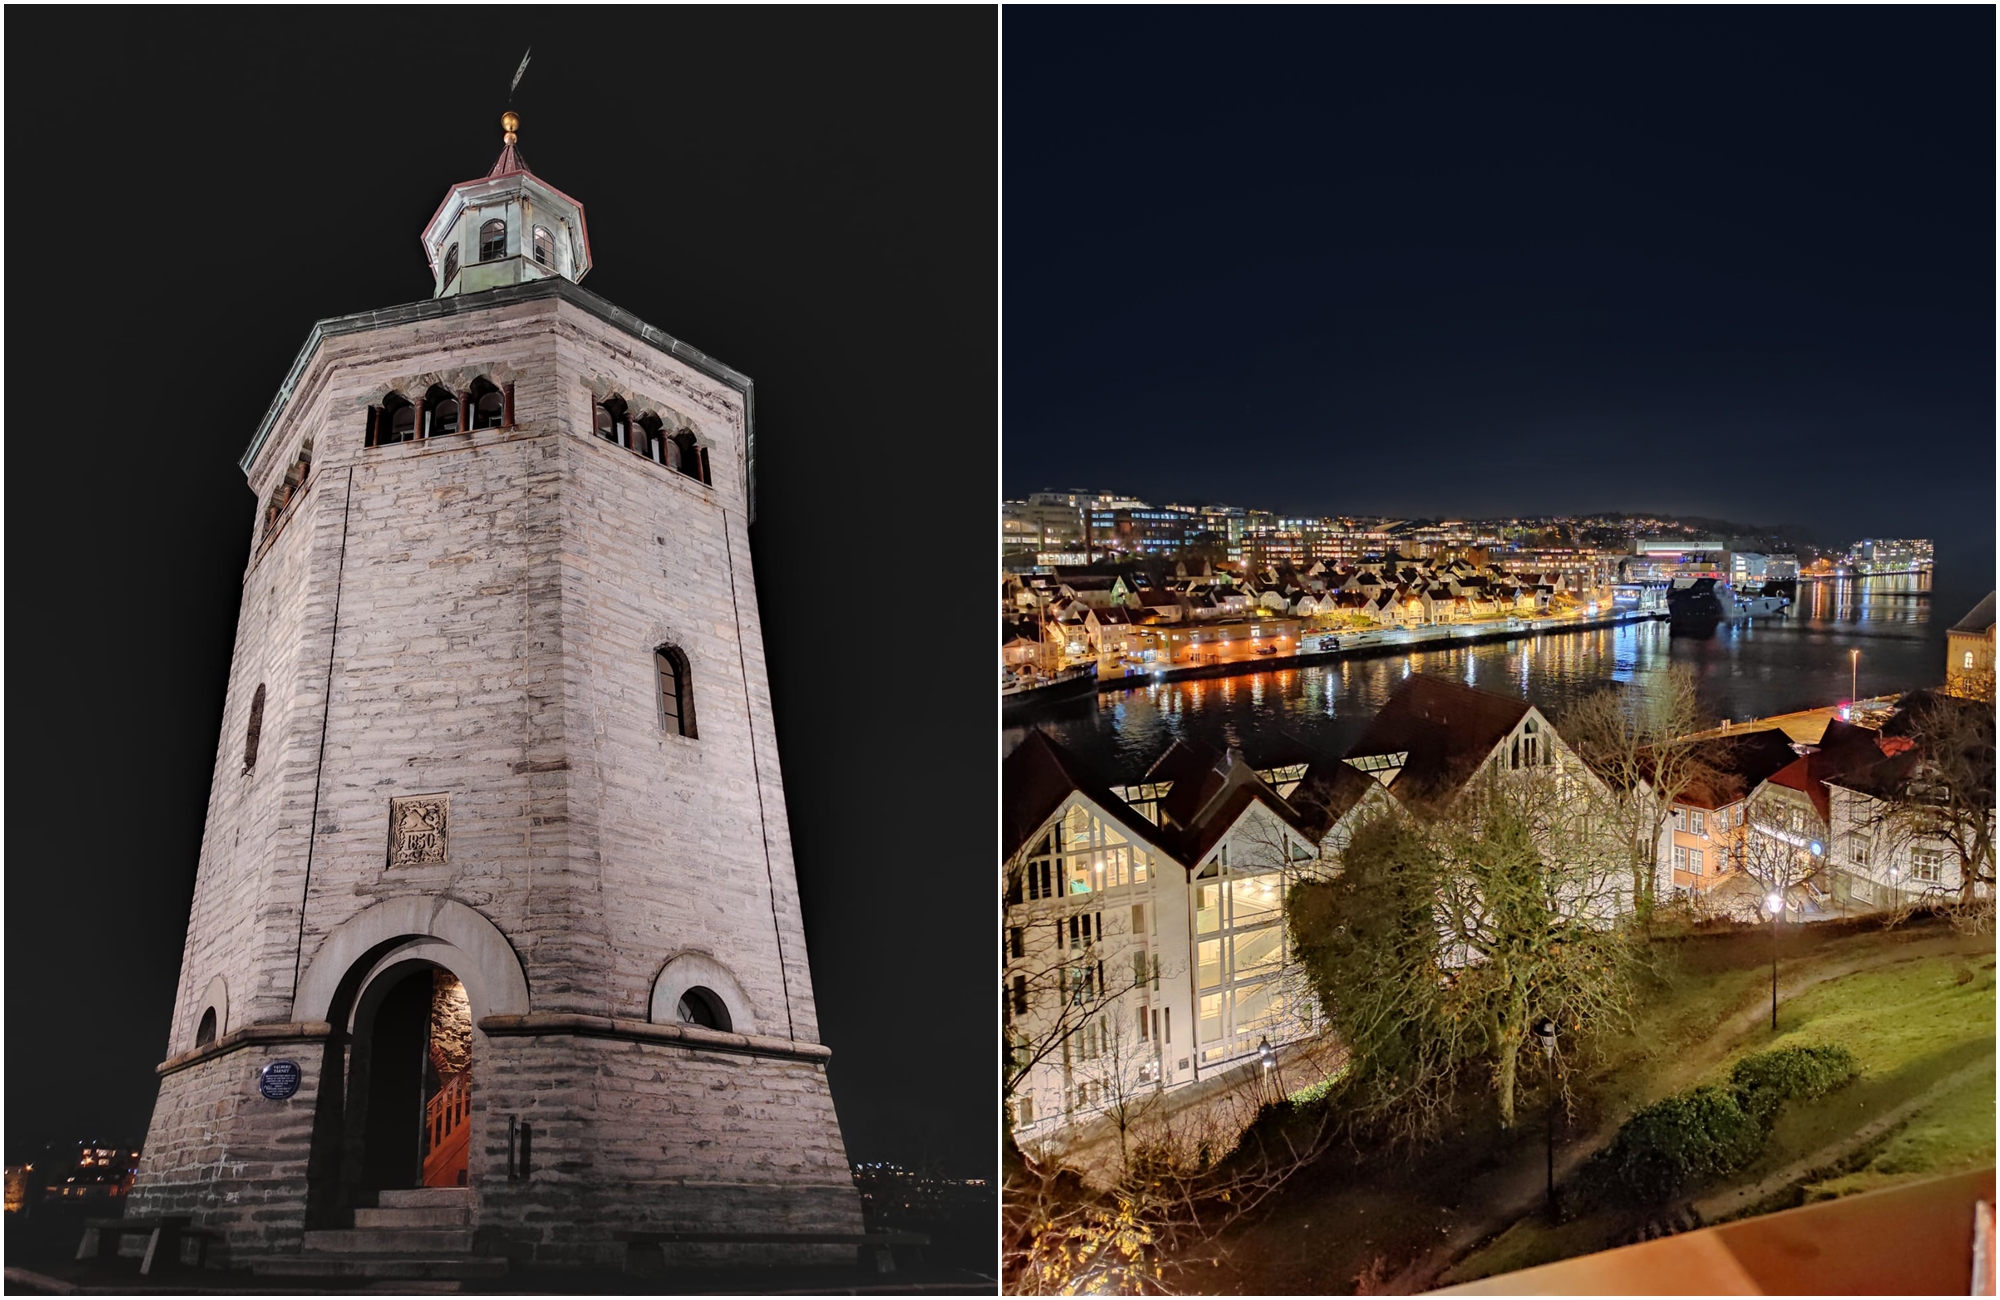 Voyage Stavanger - The Valberg Tower - Amplitudes